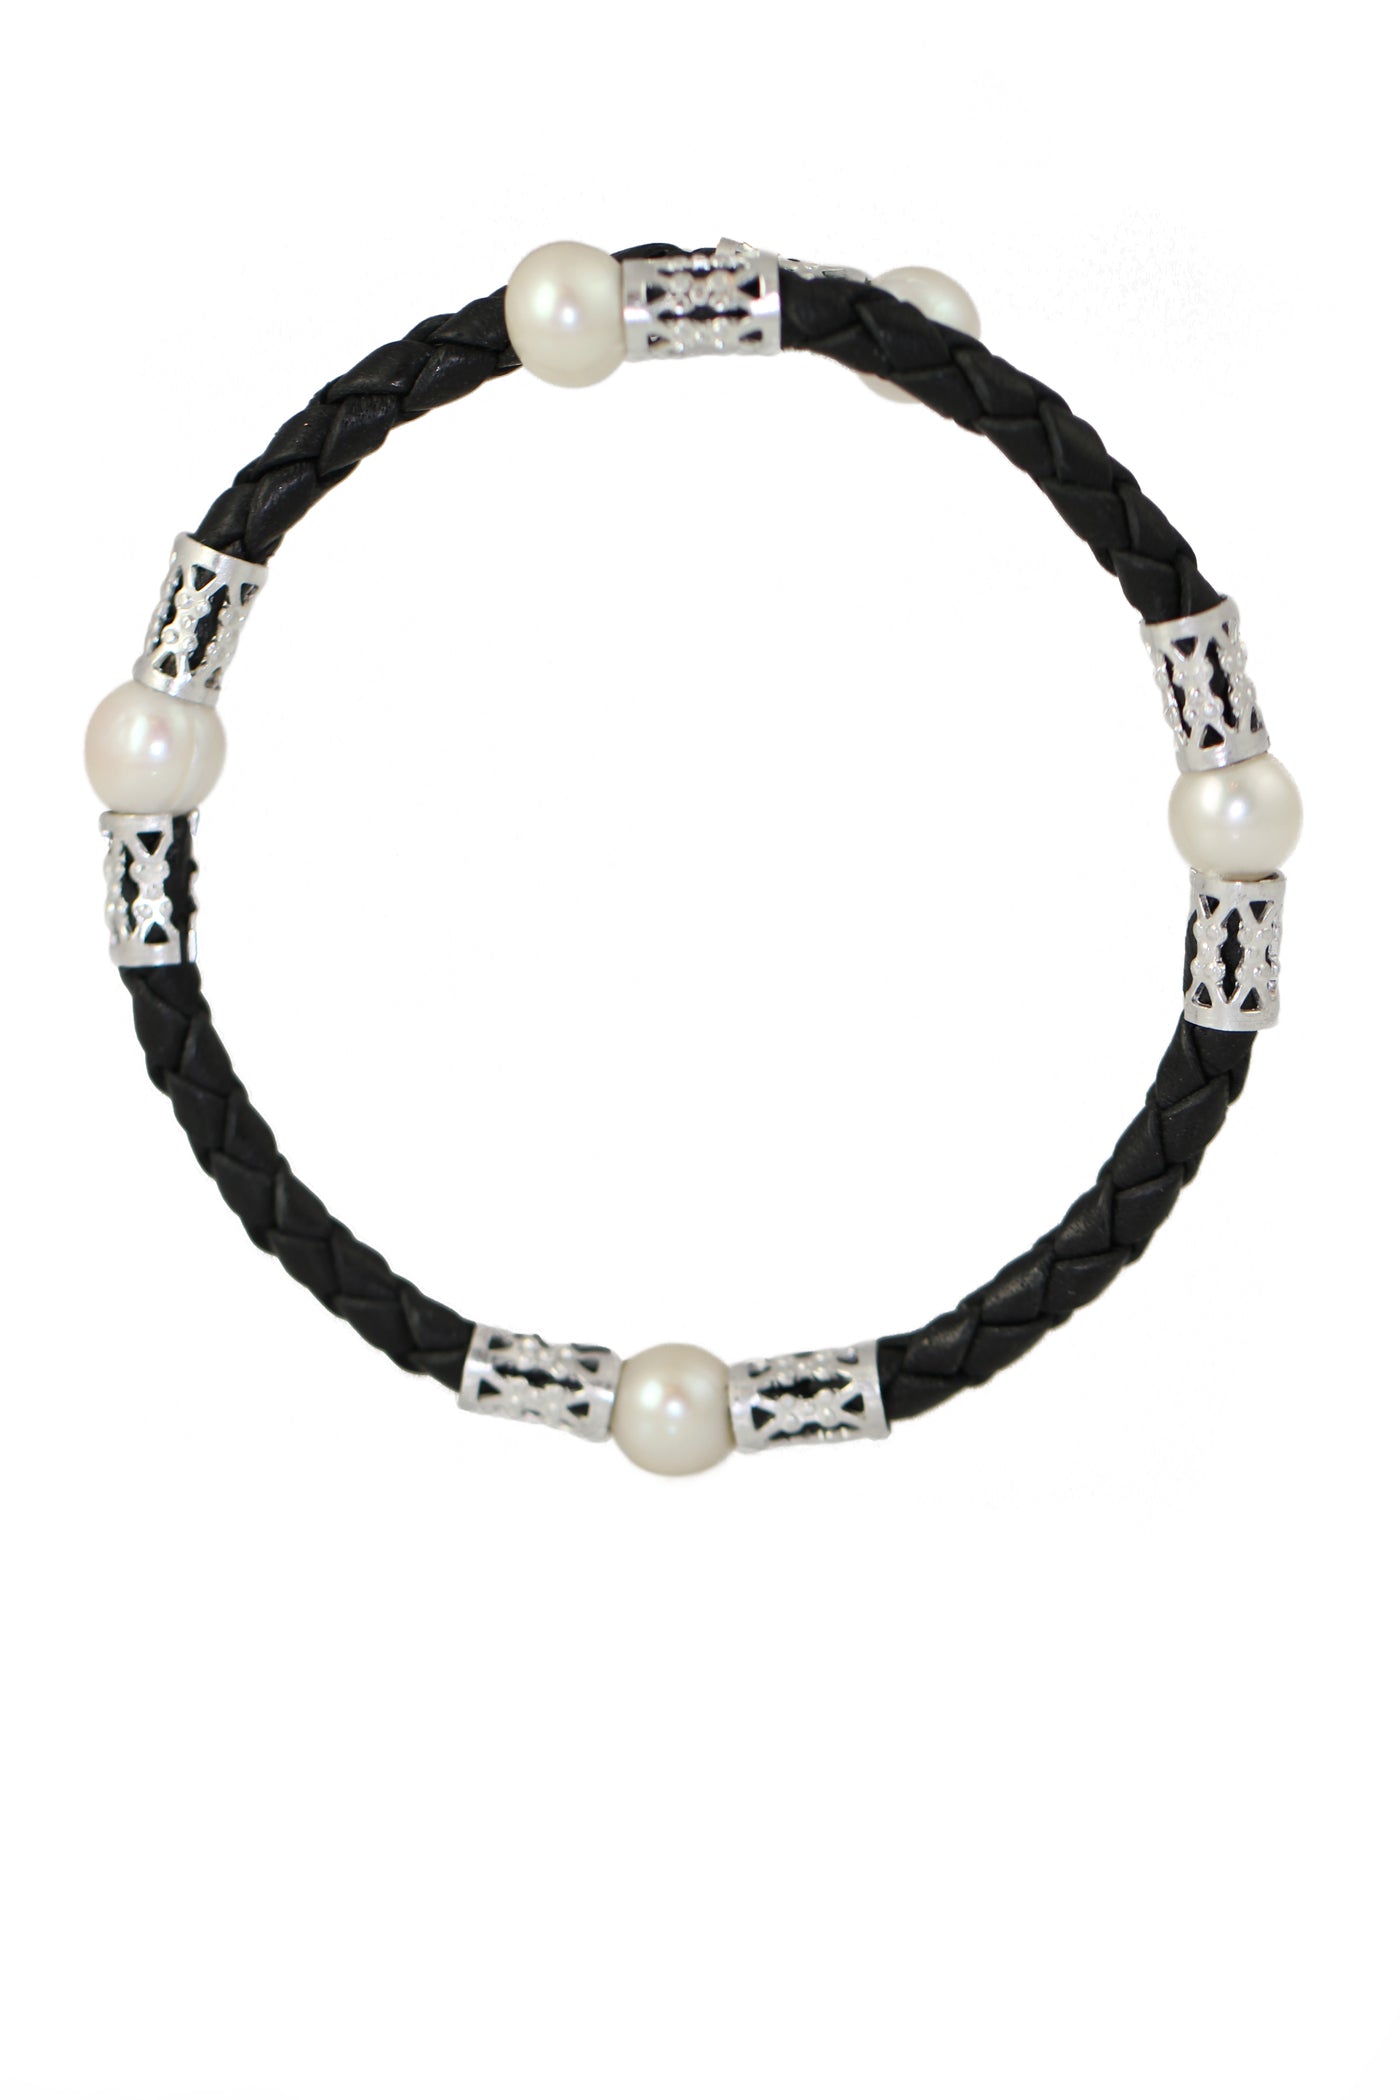 Original Teton Mountaineering Bracelet- Black Bracelet Pearls by Shari